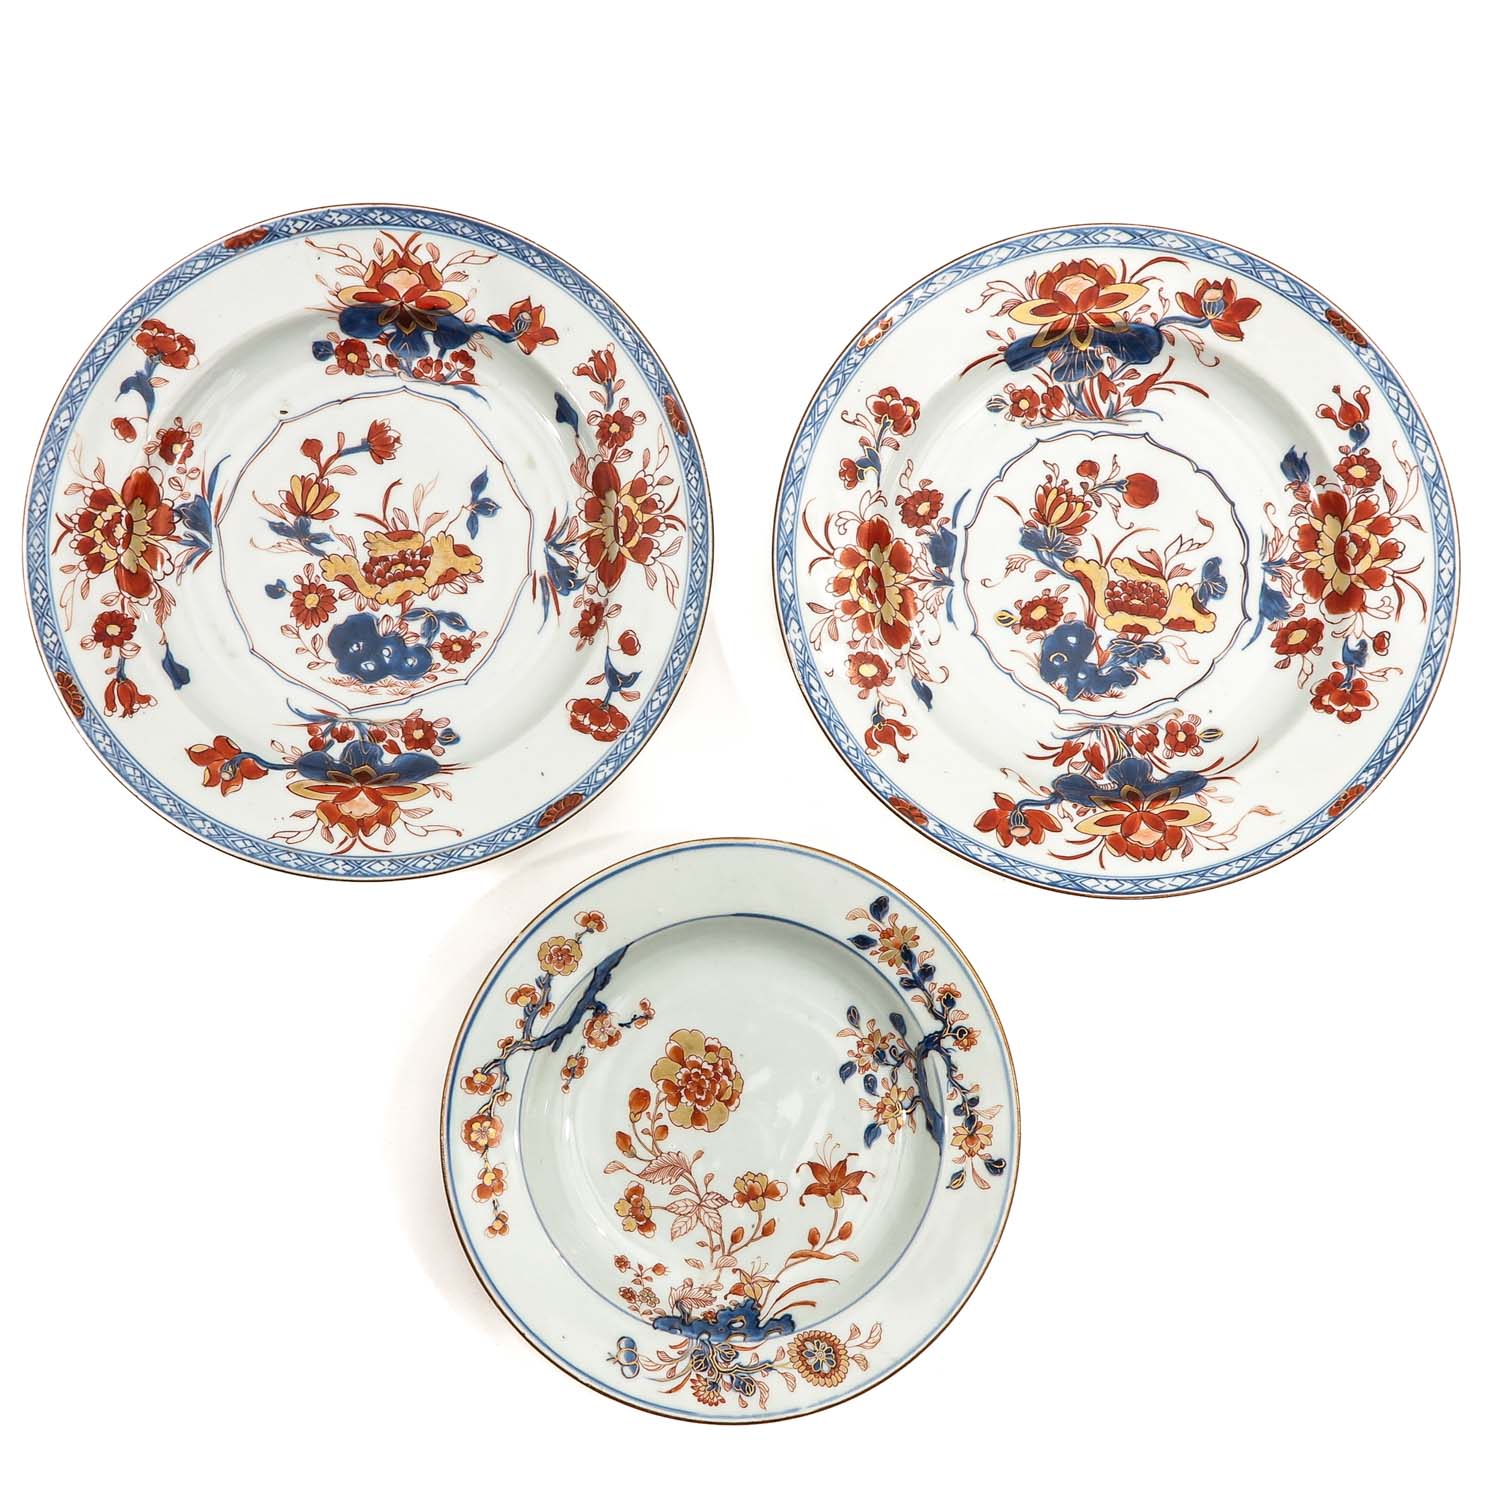 A Collection of 3 Imari Plates